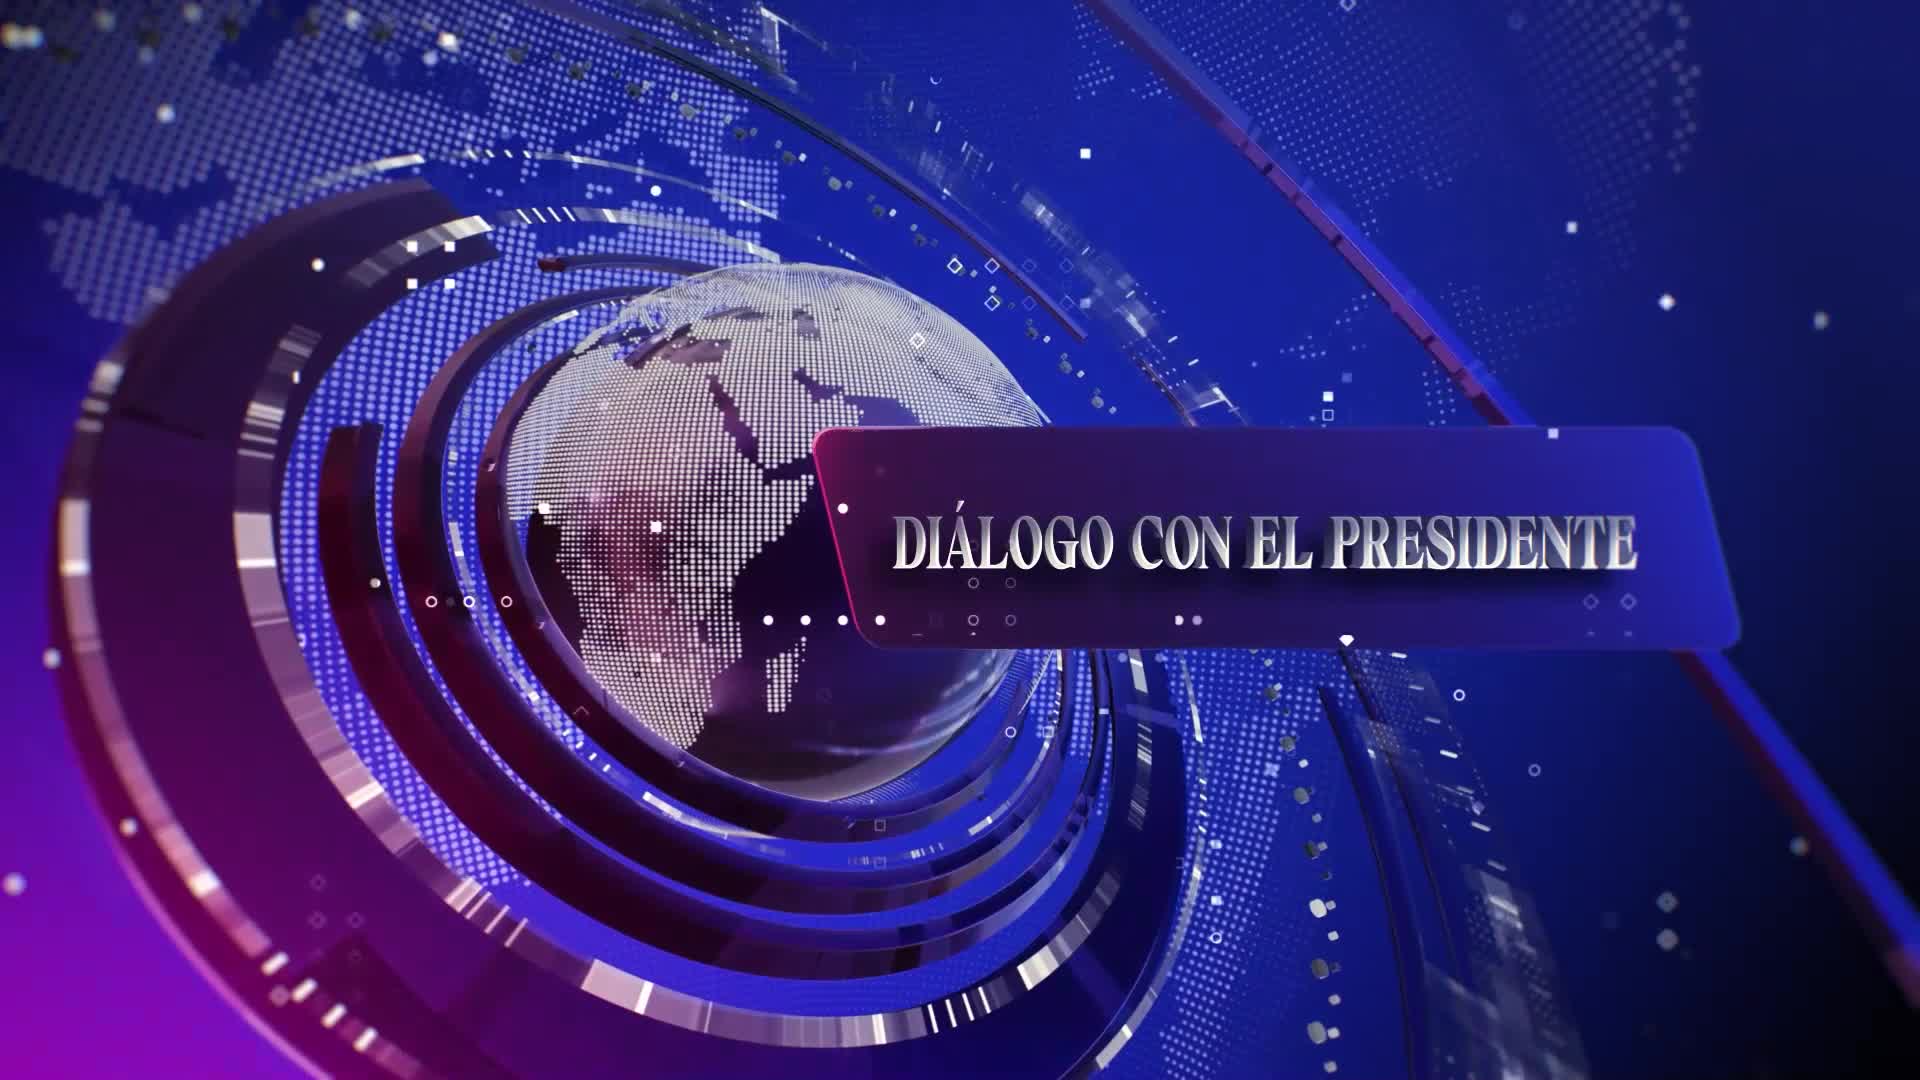 breaking news background in spanish